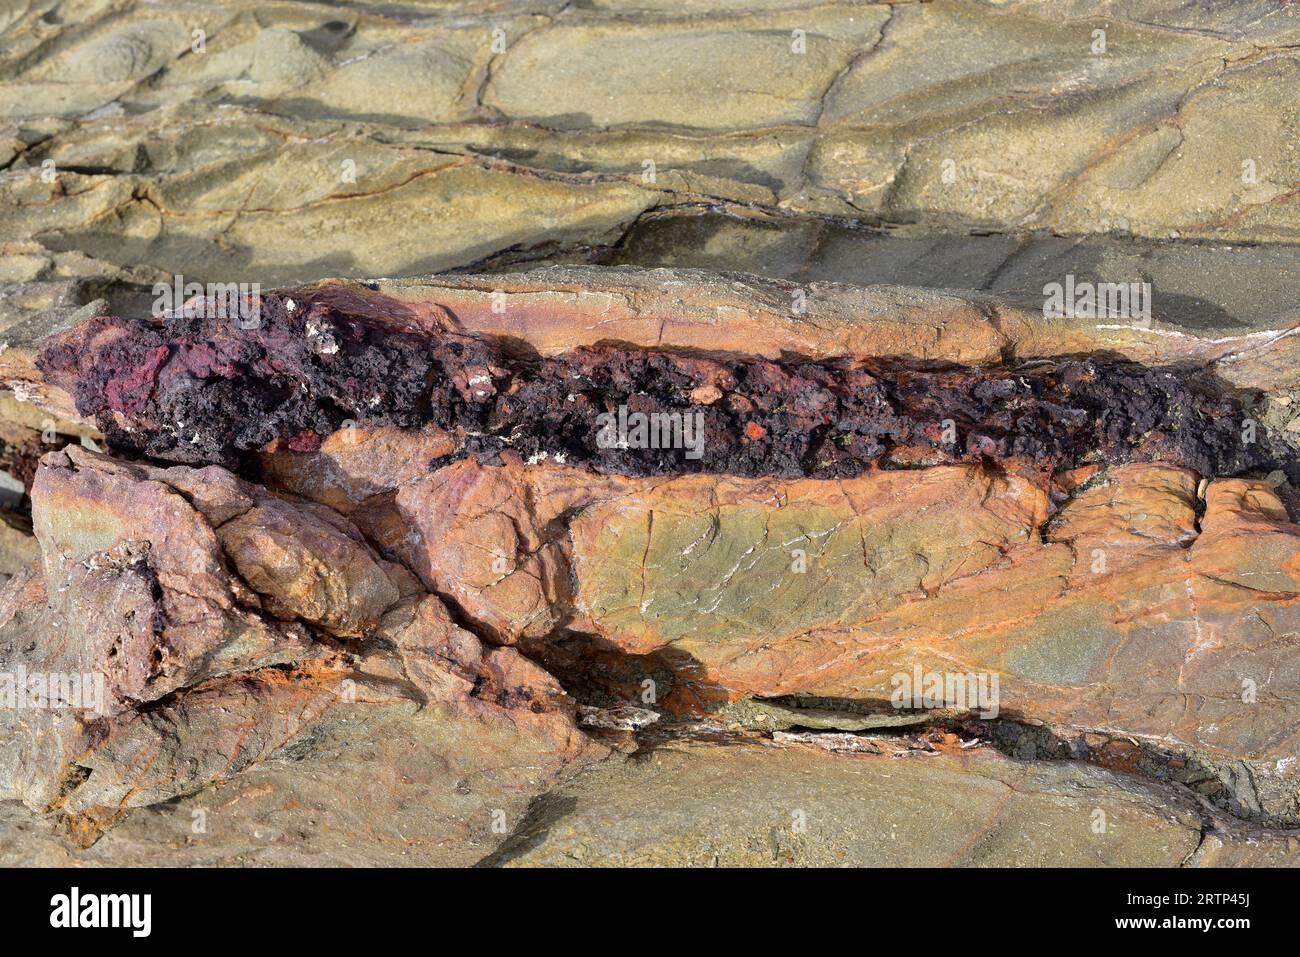 Hematite vein in a turbiditic rock. This photo was taken in Cap Favaritx, Menorca Island, Balearic Islands, Spain. Stock Photo